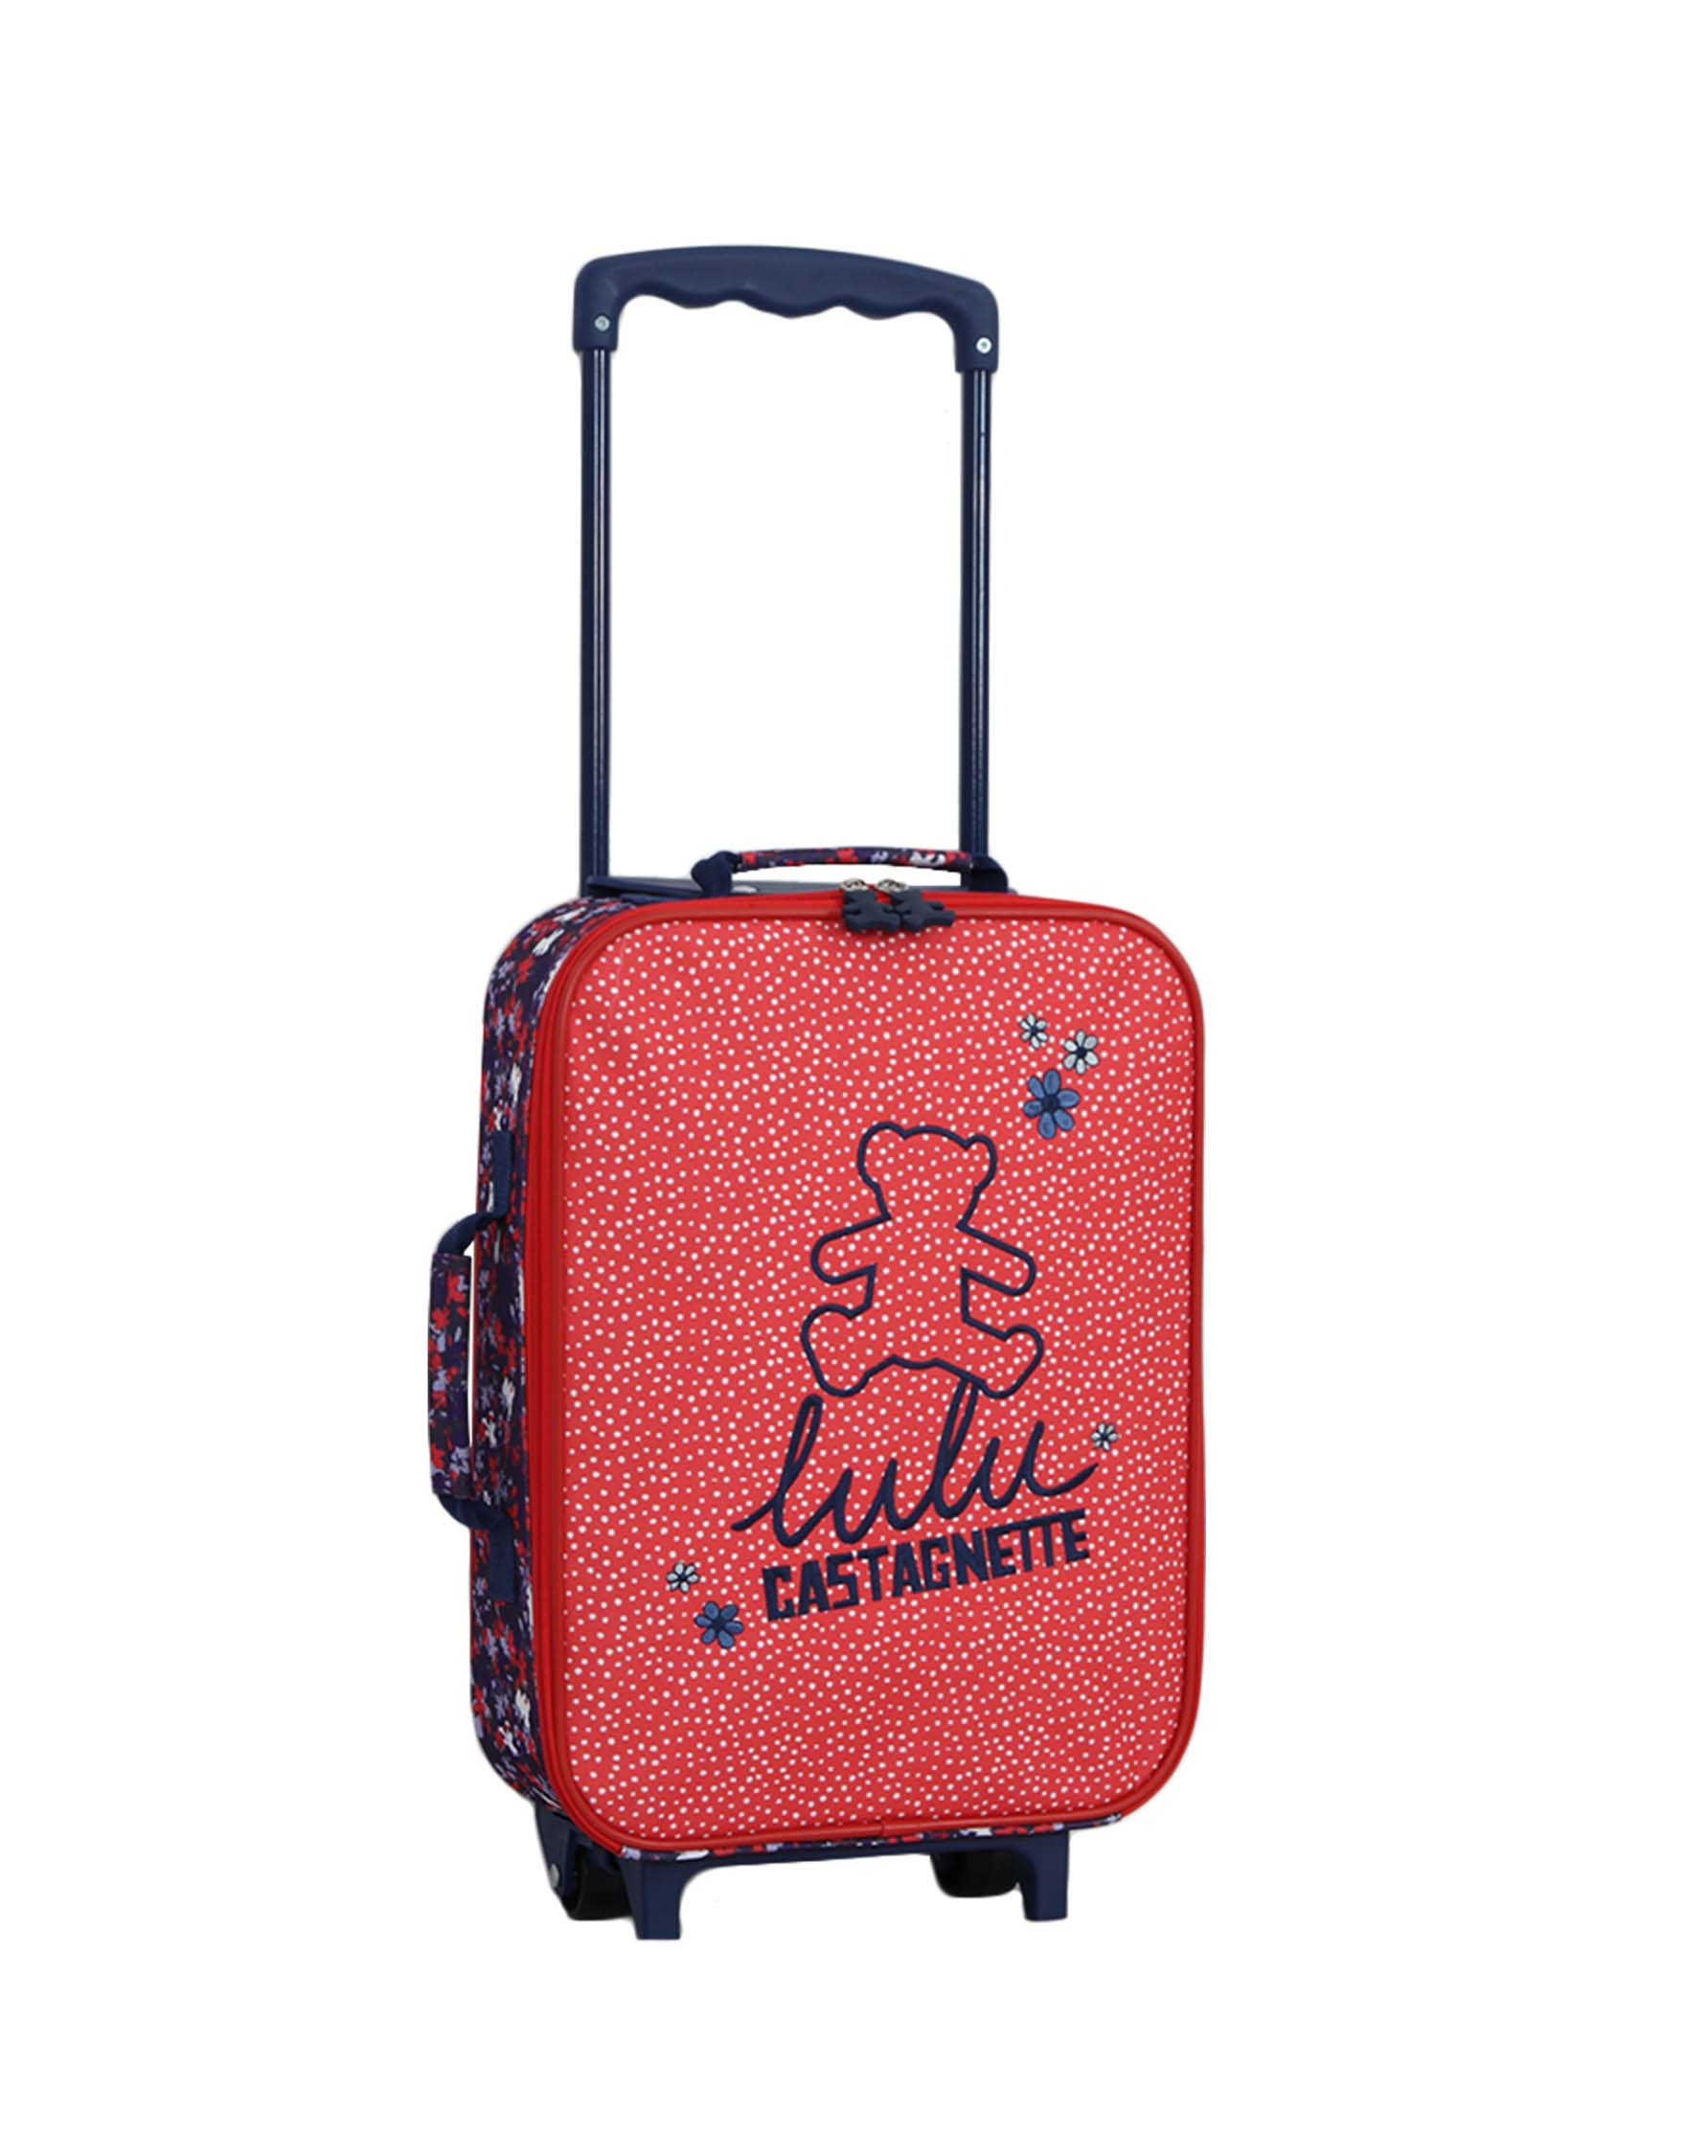 Valise Lulu Castagnette valise taille moyenne rigide 60cm sailor-a